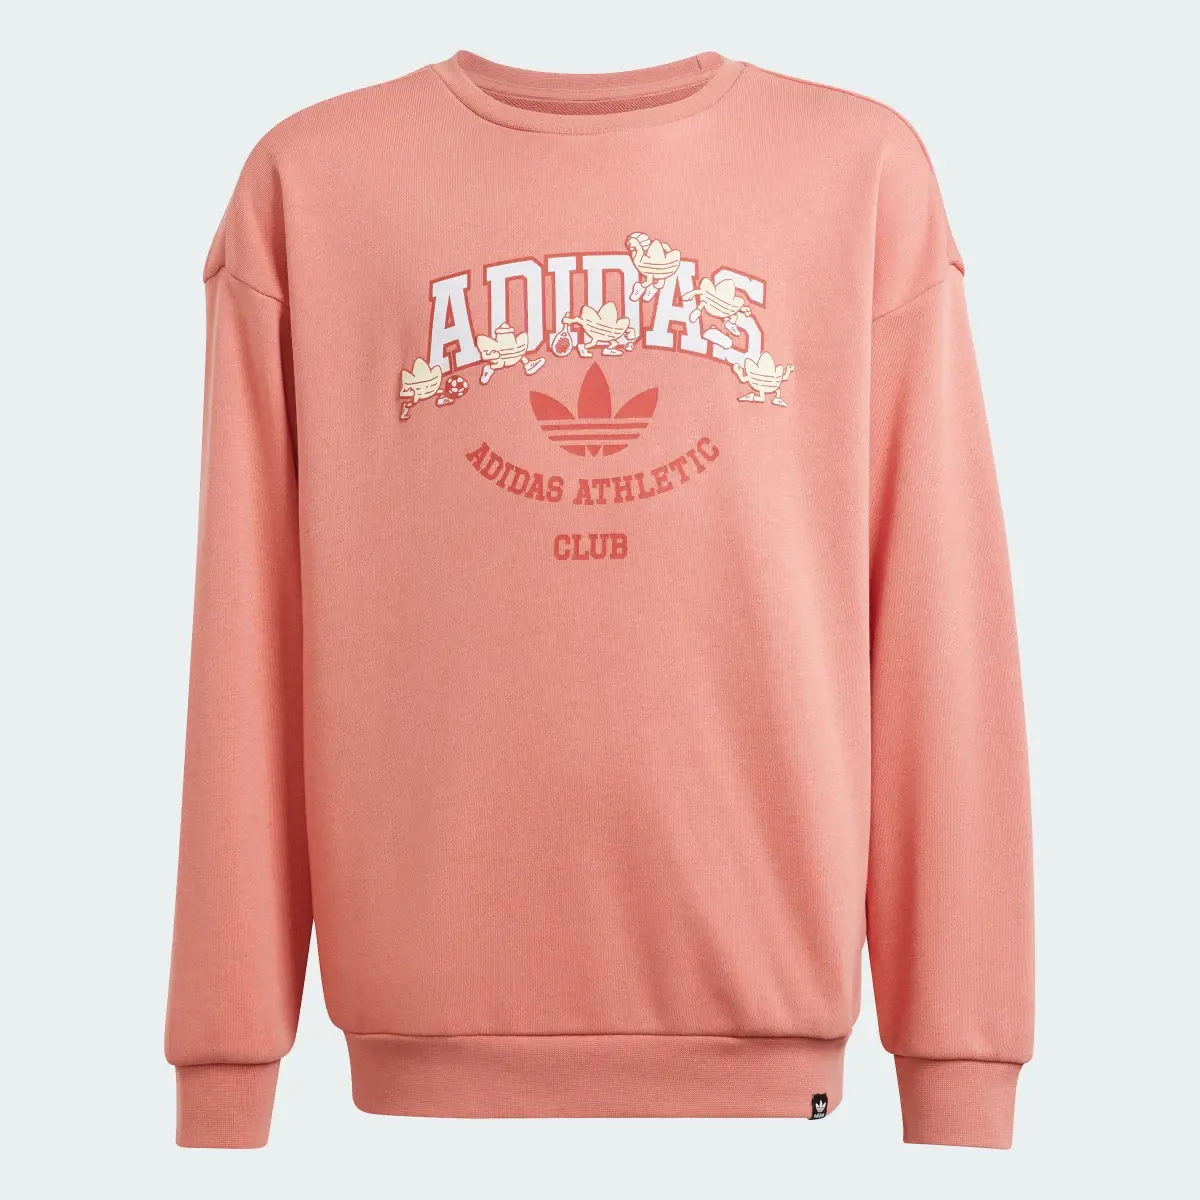 Adidas Kids Sweatshirt. 1